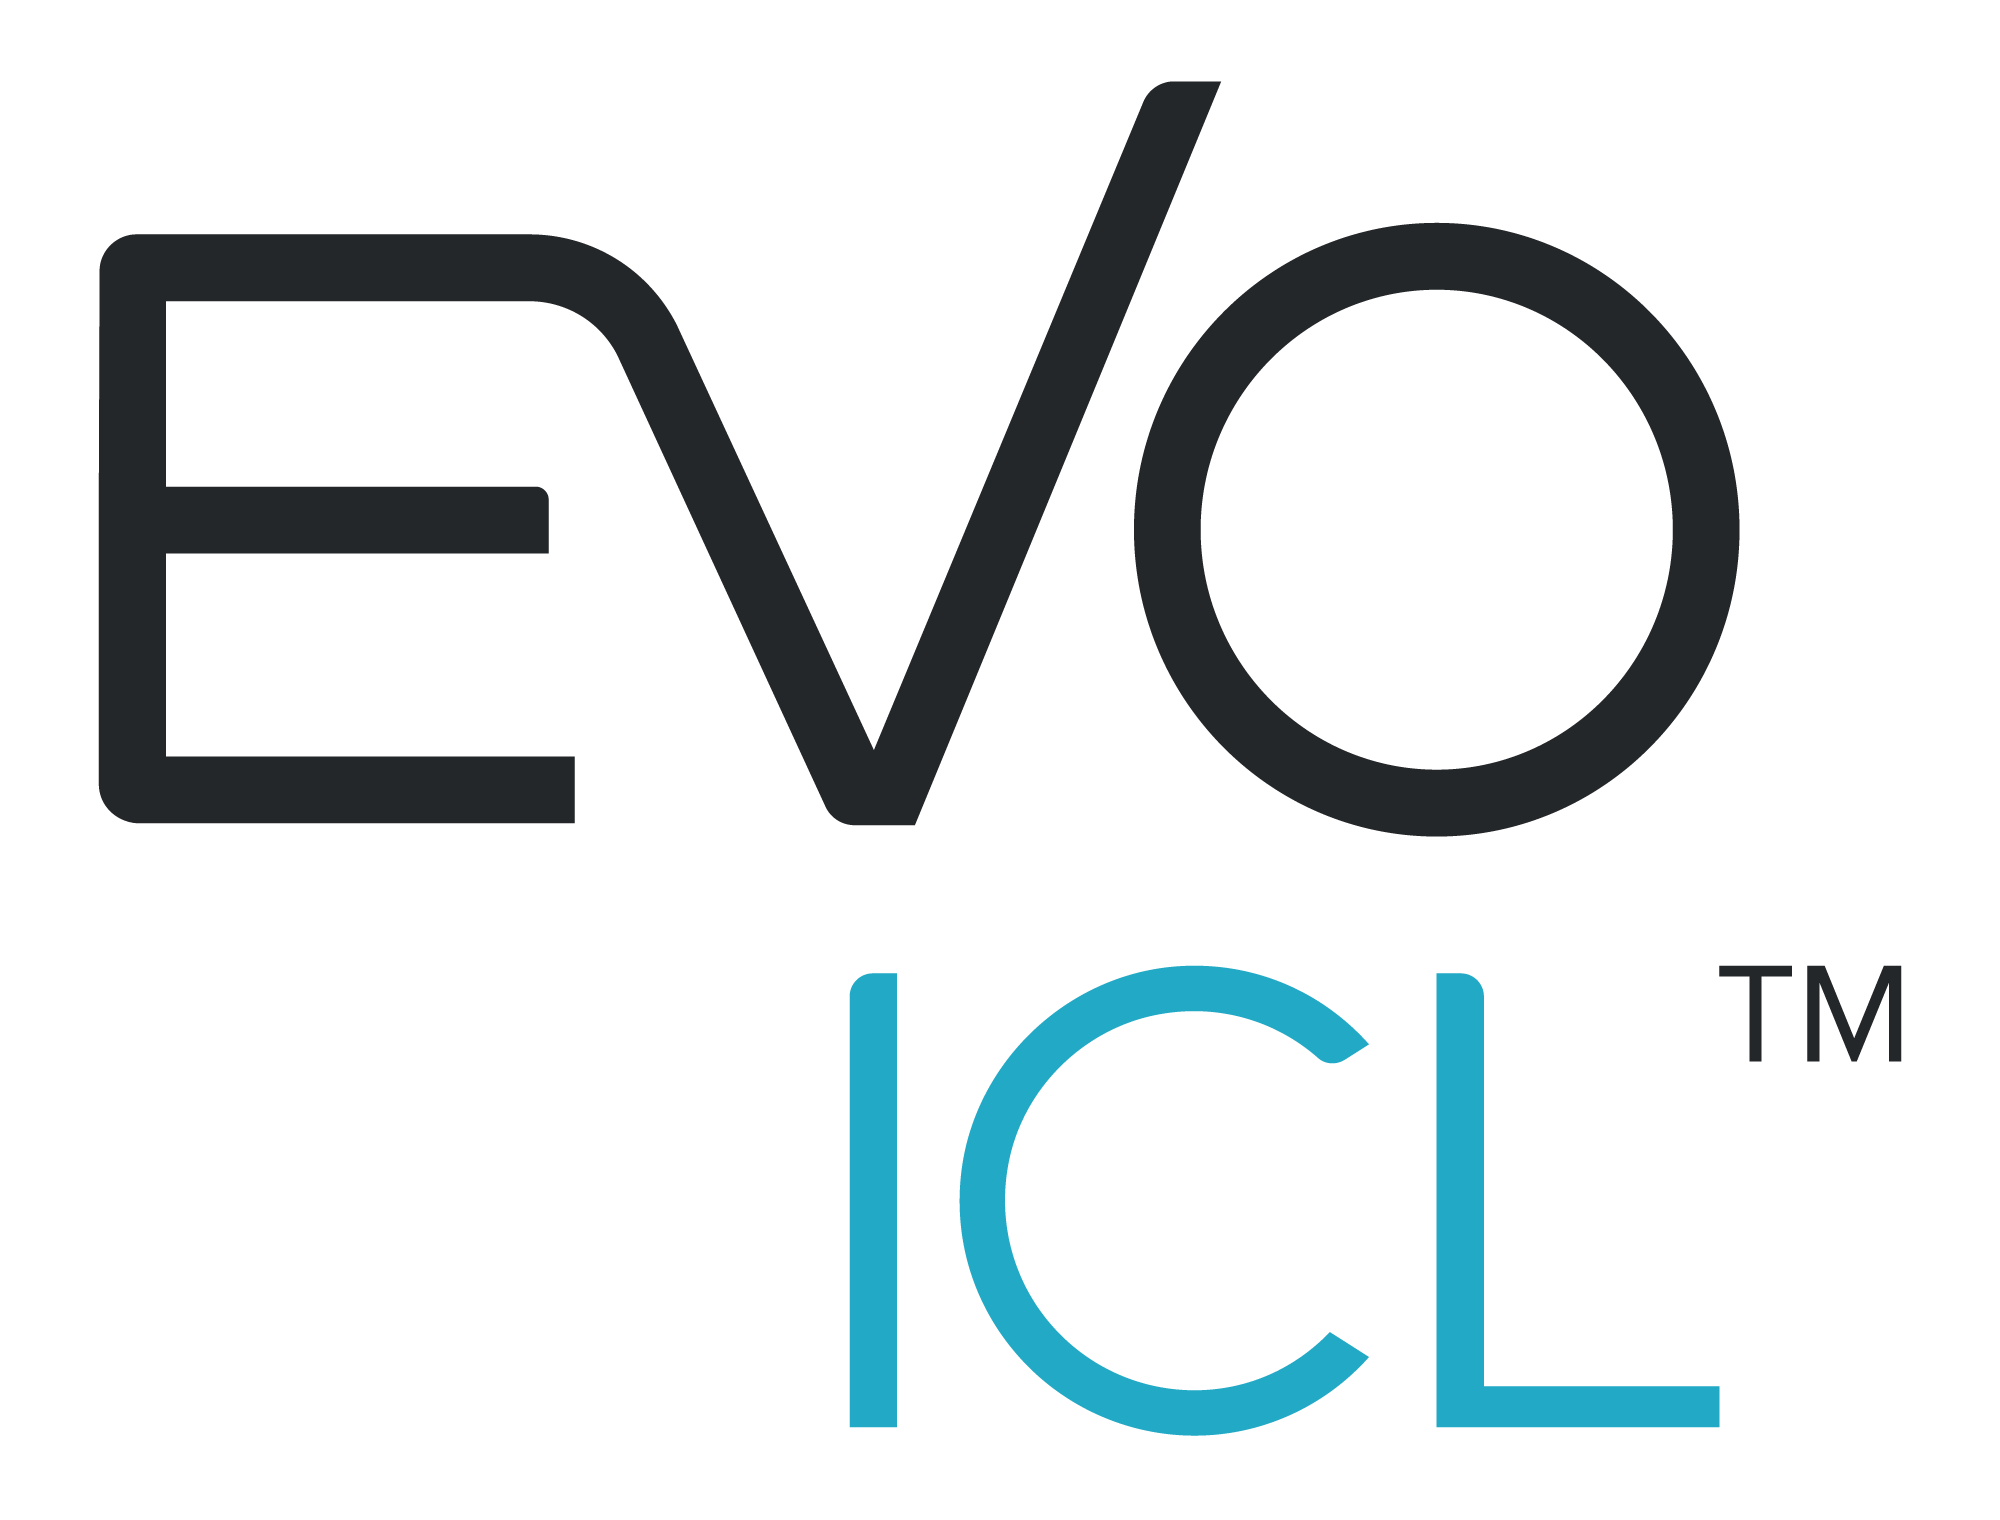 EVO ICL brand logo